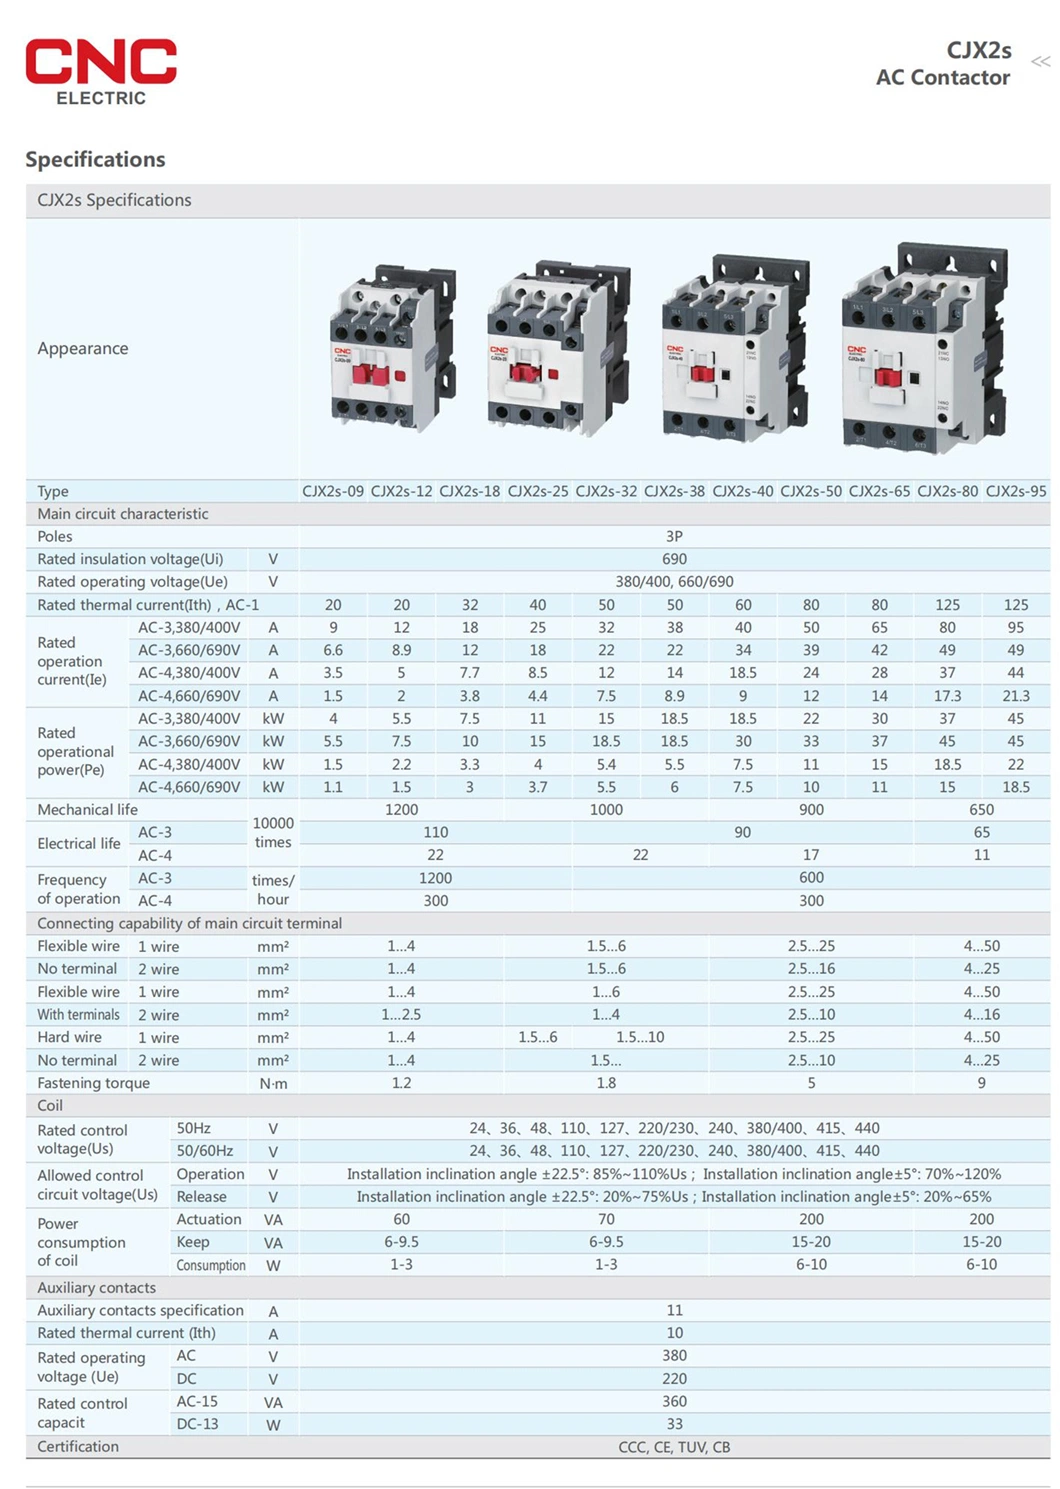 CNC OEM ODM Factory Price Three Phase 3 Pole Contactors Magnetic Contactor 9A Magnetic Contactor 40A